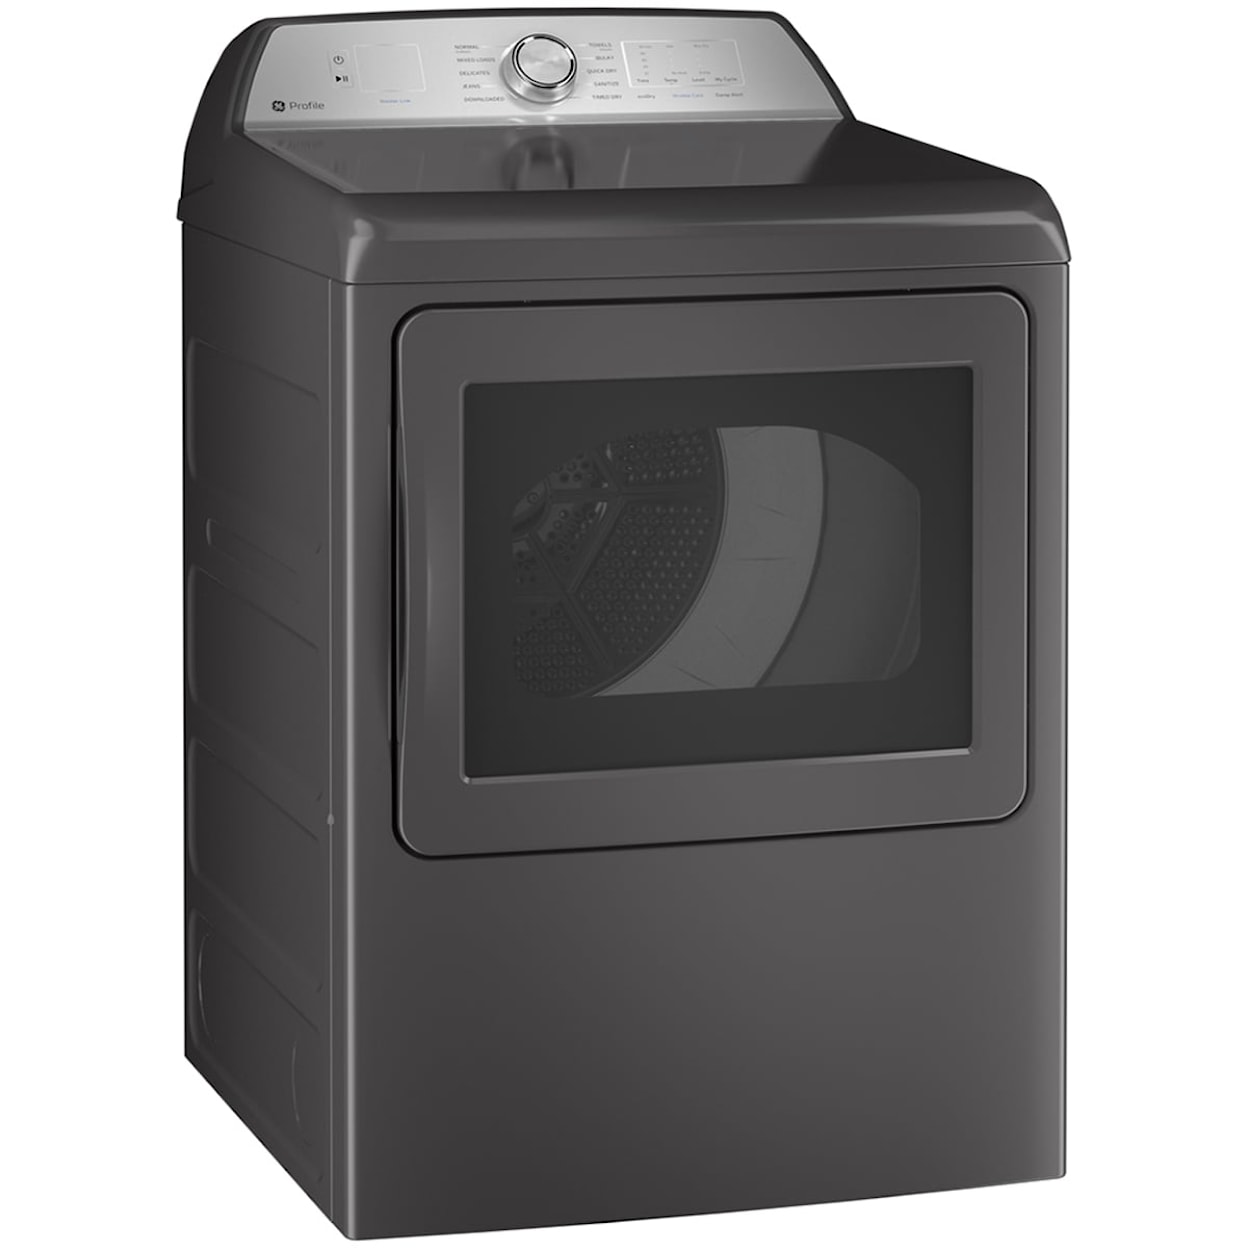 GE Appliances Dryers DRYER